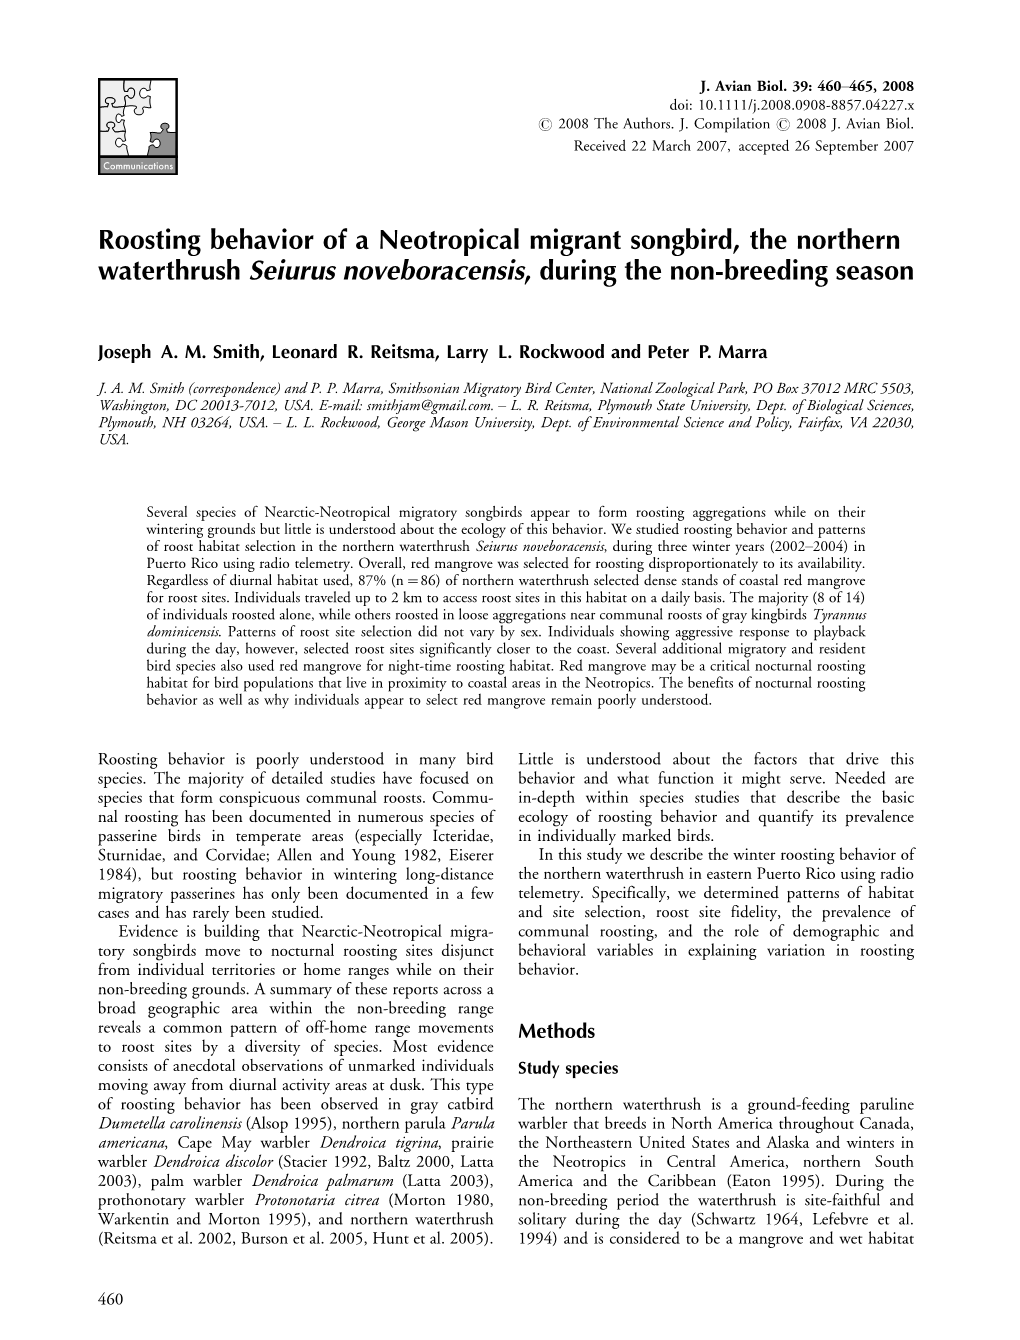 Roosting Behavior of a Neotropical Migrant Songbird, the Northern Waterthrush Seiurus Noveboracensis, During the Non-Breeding Season